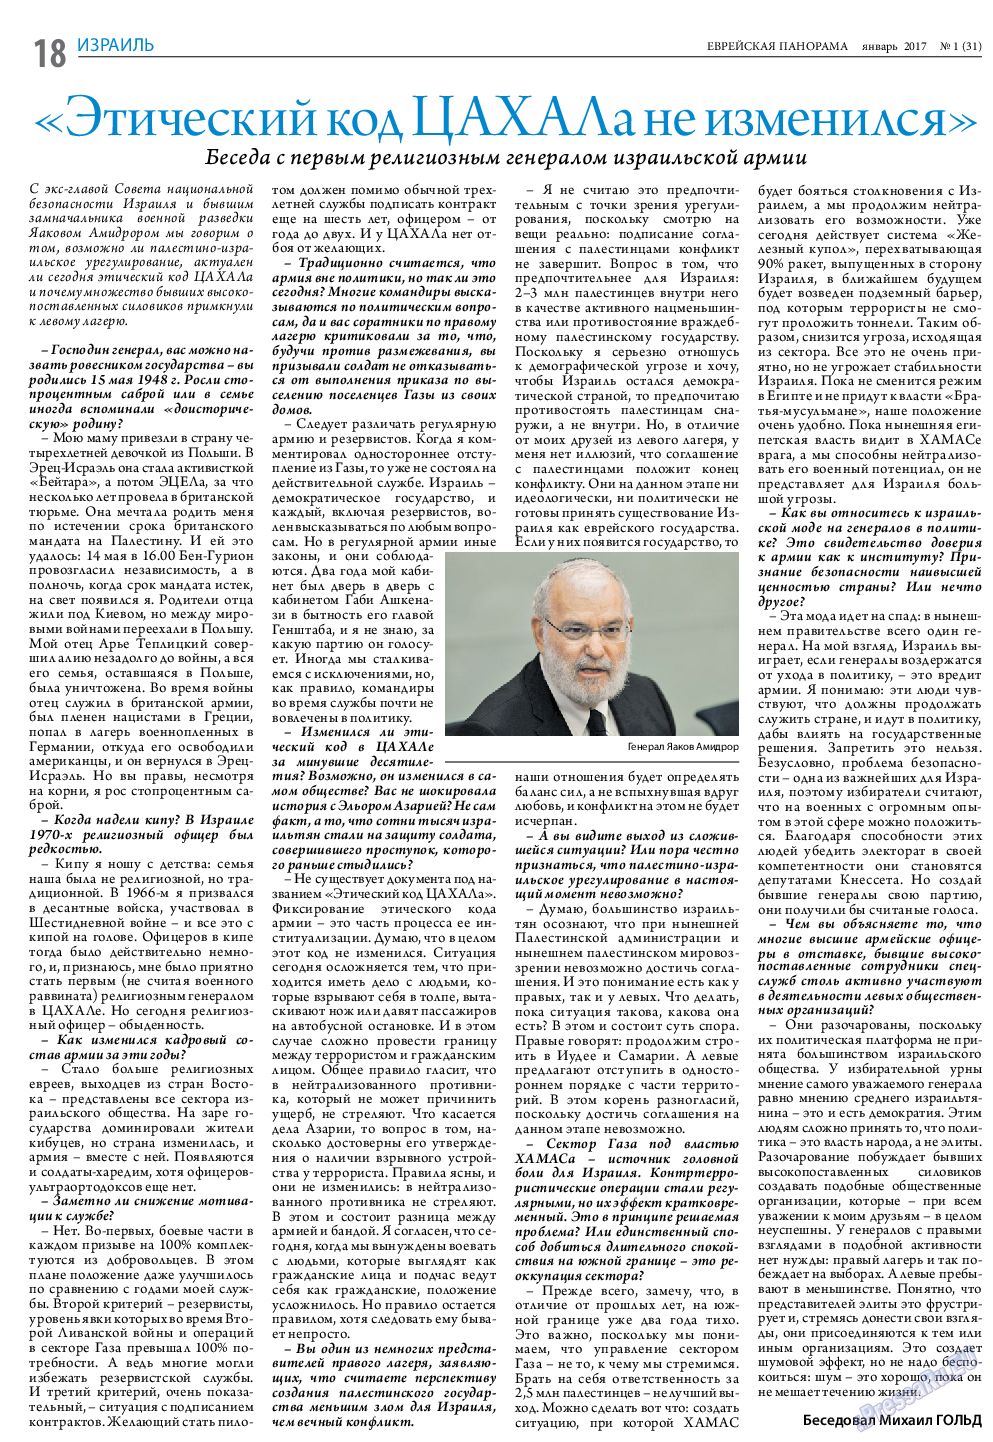 Еврейская панорама, газета. 2017 №1 стр.18